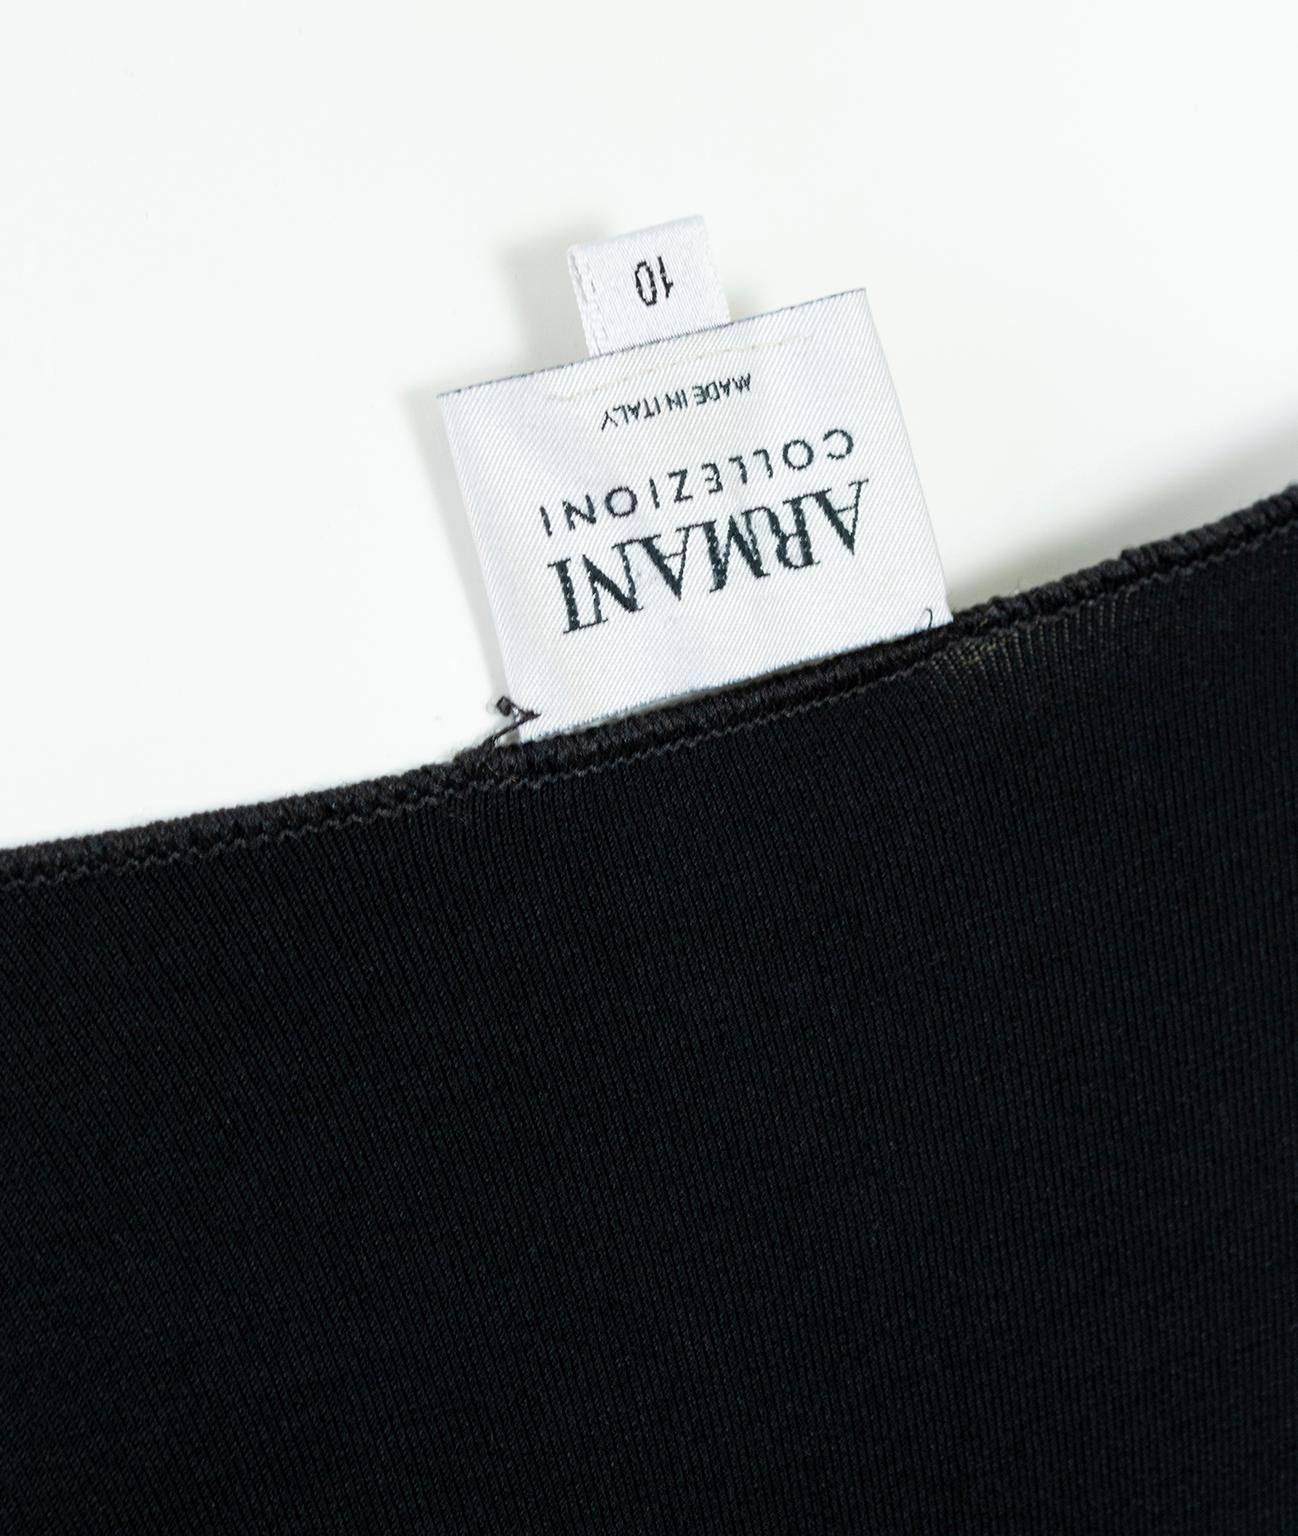 Women's Armani Collezioni Black Jersey Plunging Criss-Cross Wrap Pullover Top, size 10 For Sale